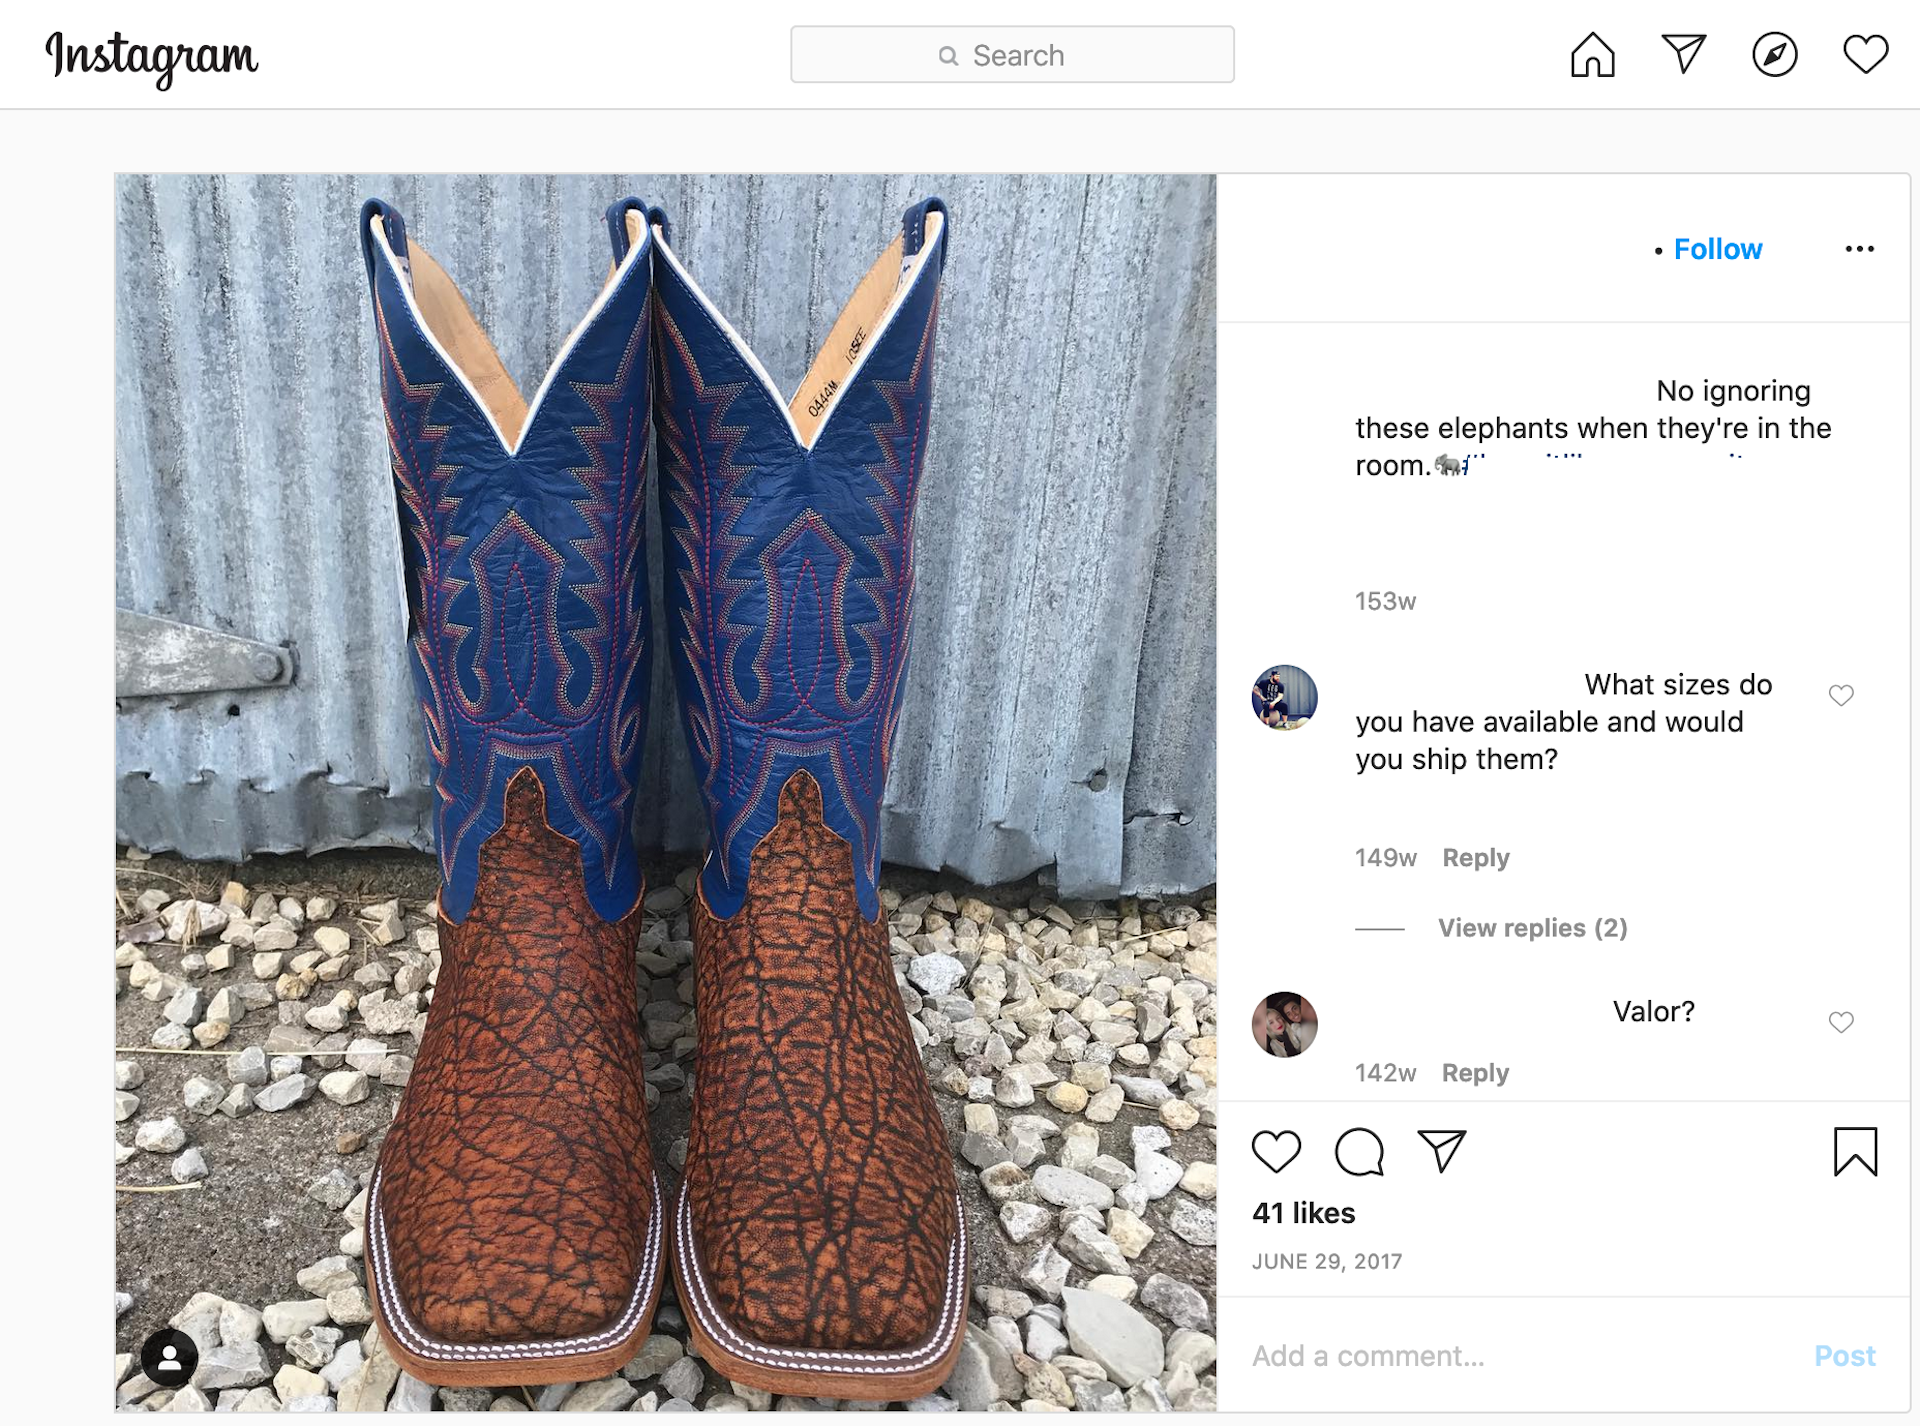 elephant skin cowboy boots